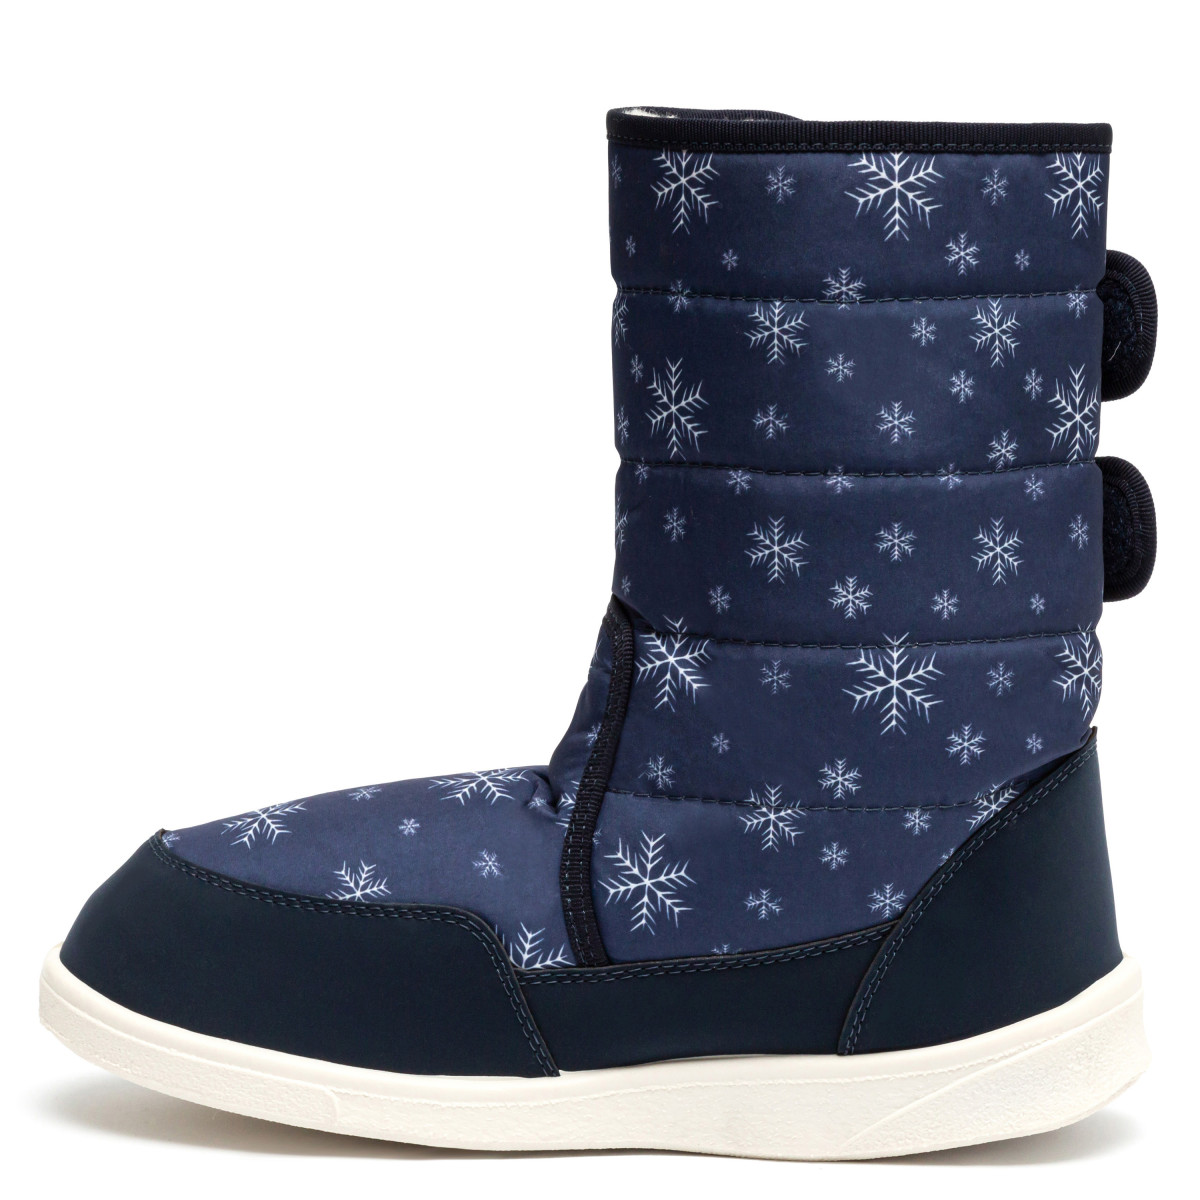 Boots AURORA Print, Navy Snowflakes